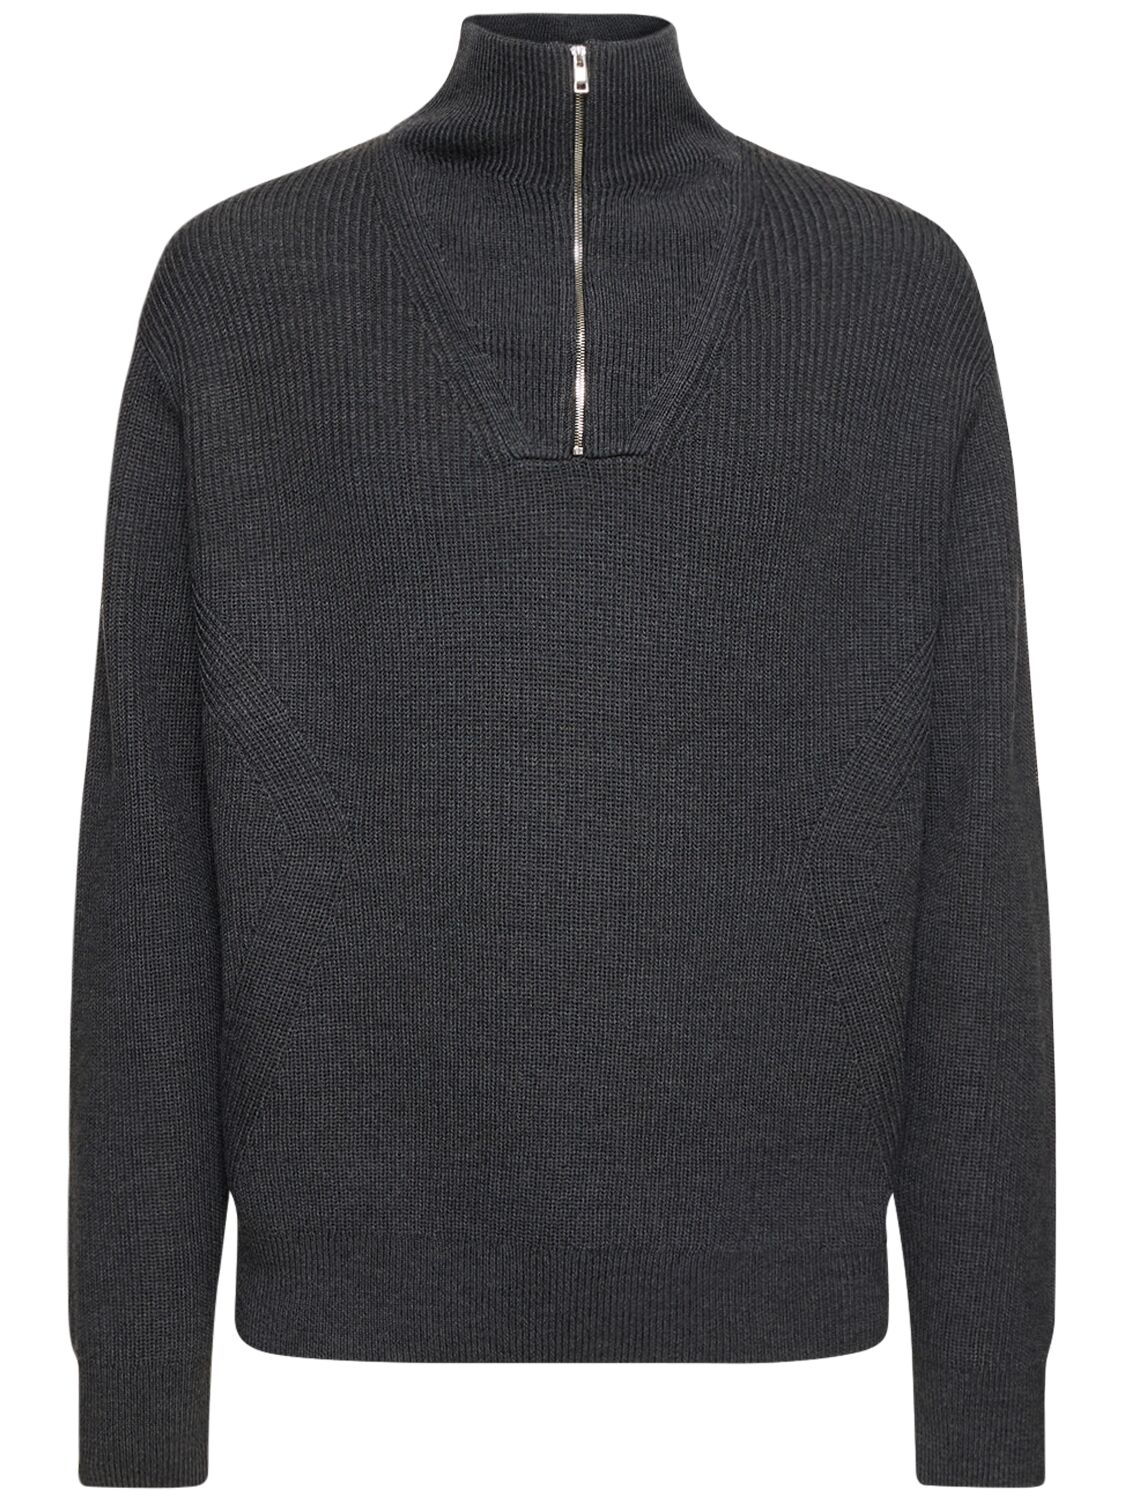 Half-zip Wool Blend Knit Sweater